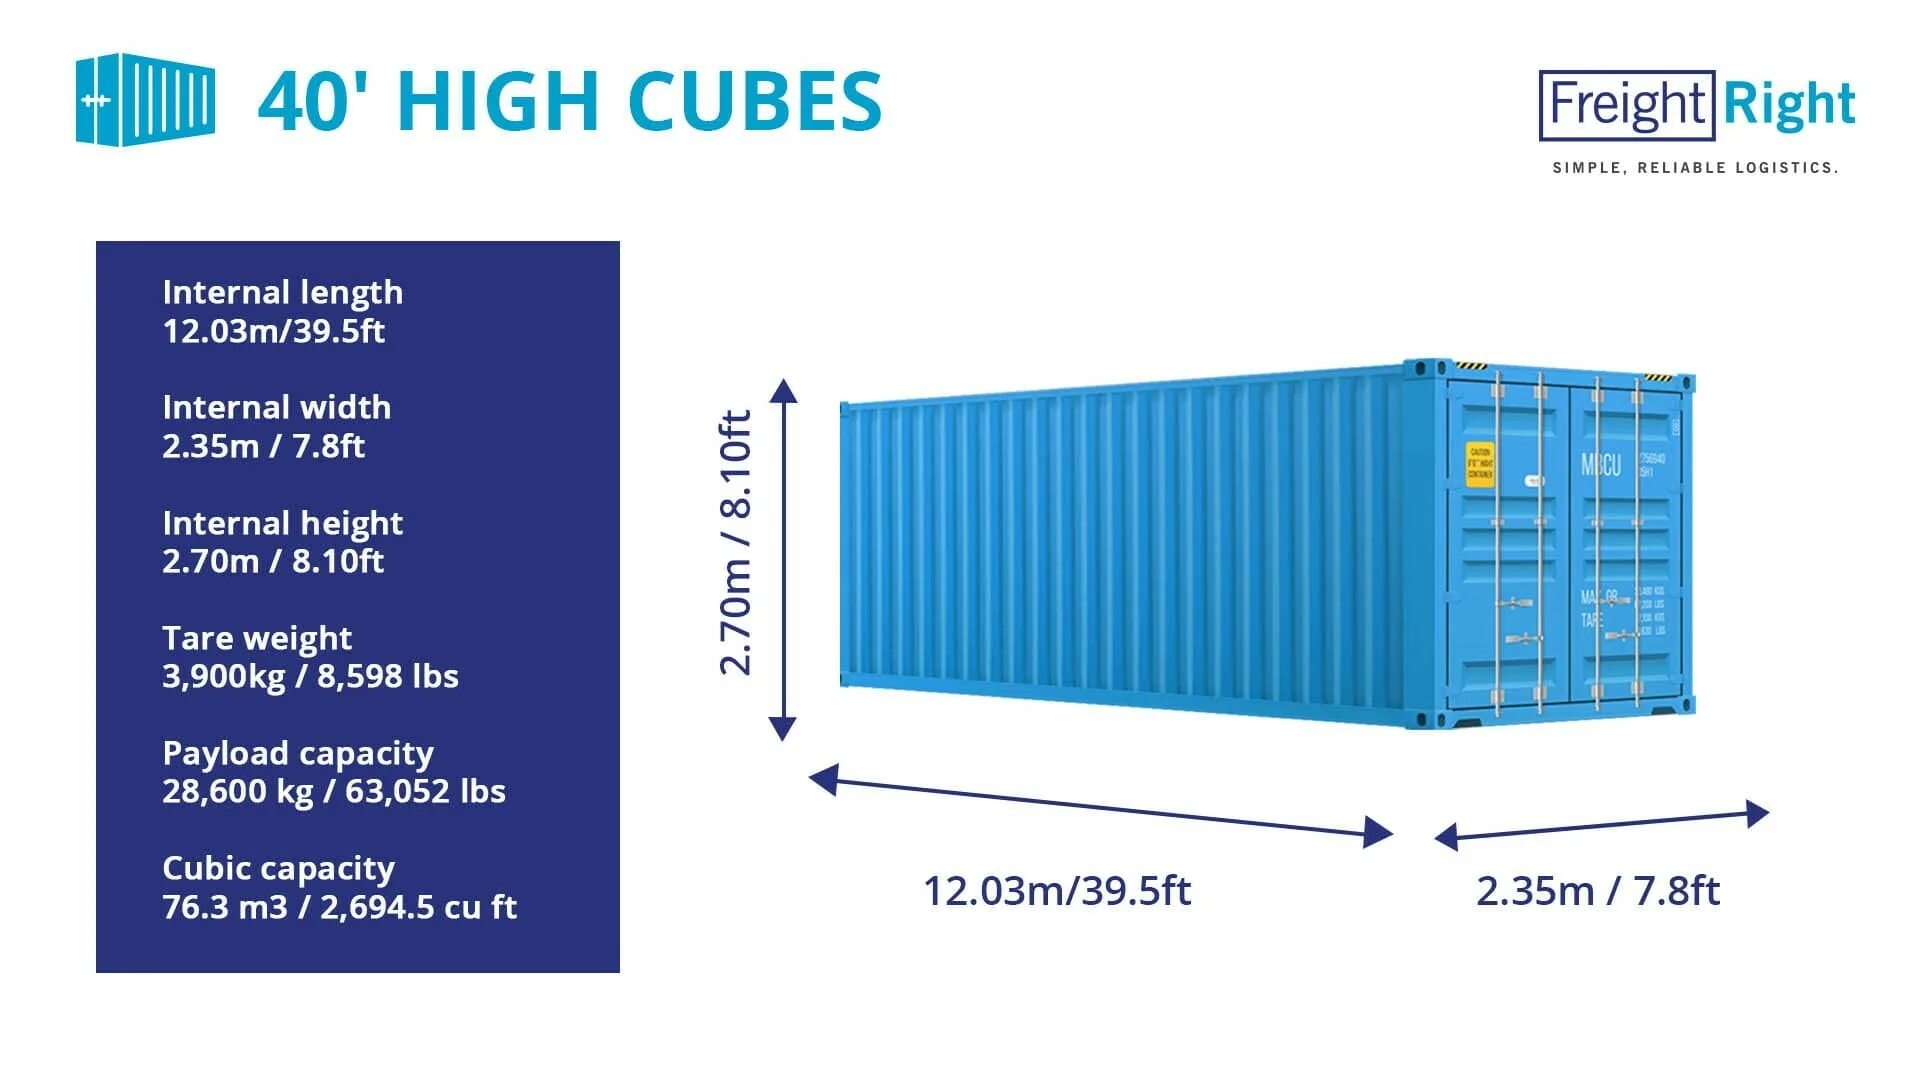 Контейнер 40 HC/hq (High Cube). Контейнер 40 фут Хай Кьюб размер. Габариты 40 фут контейнера High Cube. Размеры морского контейнера 40 футов High Cube. Вес морского контейнера 40